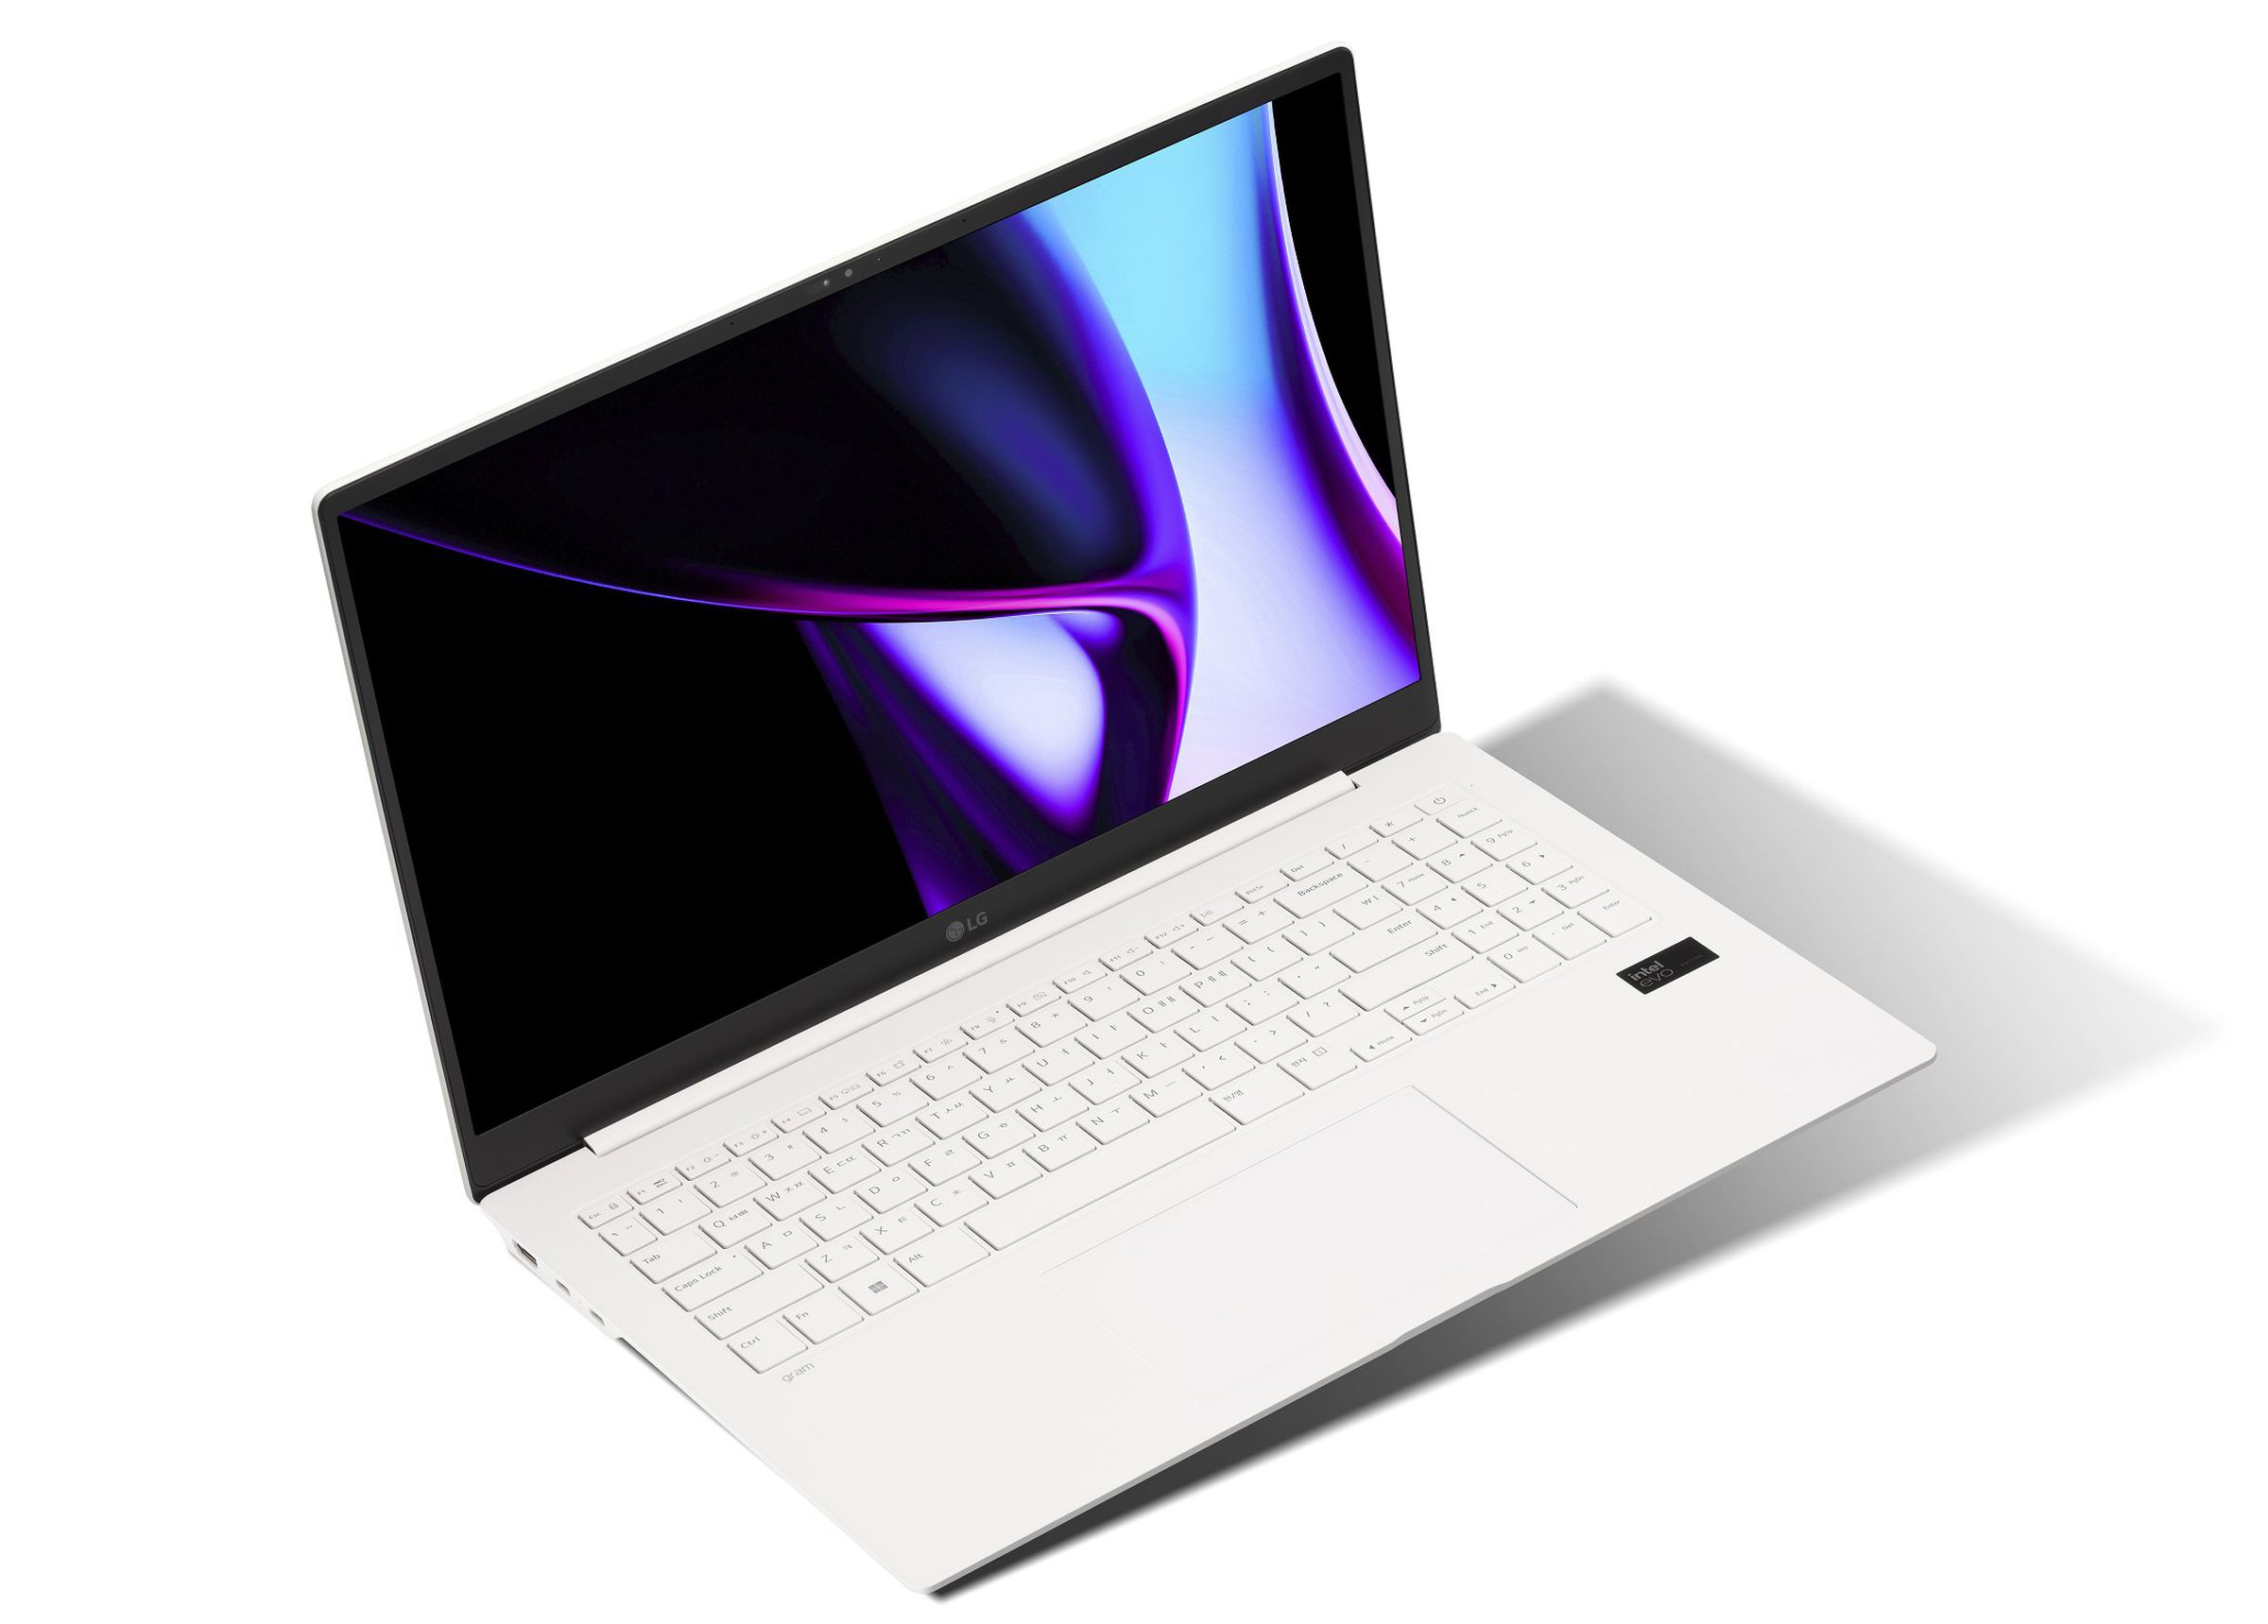 White LG laptop on a white background.